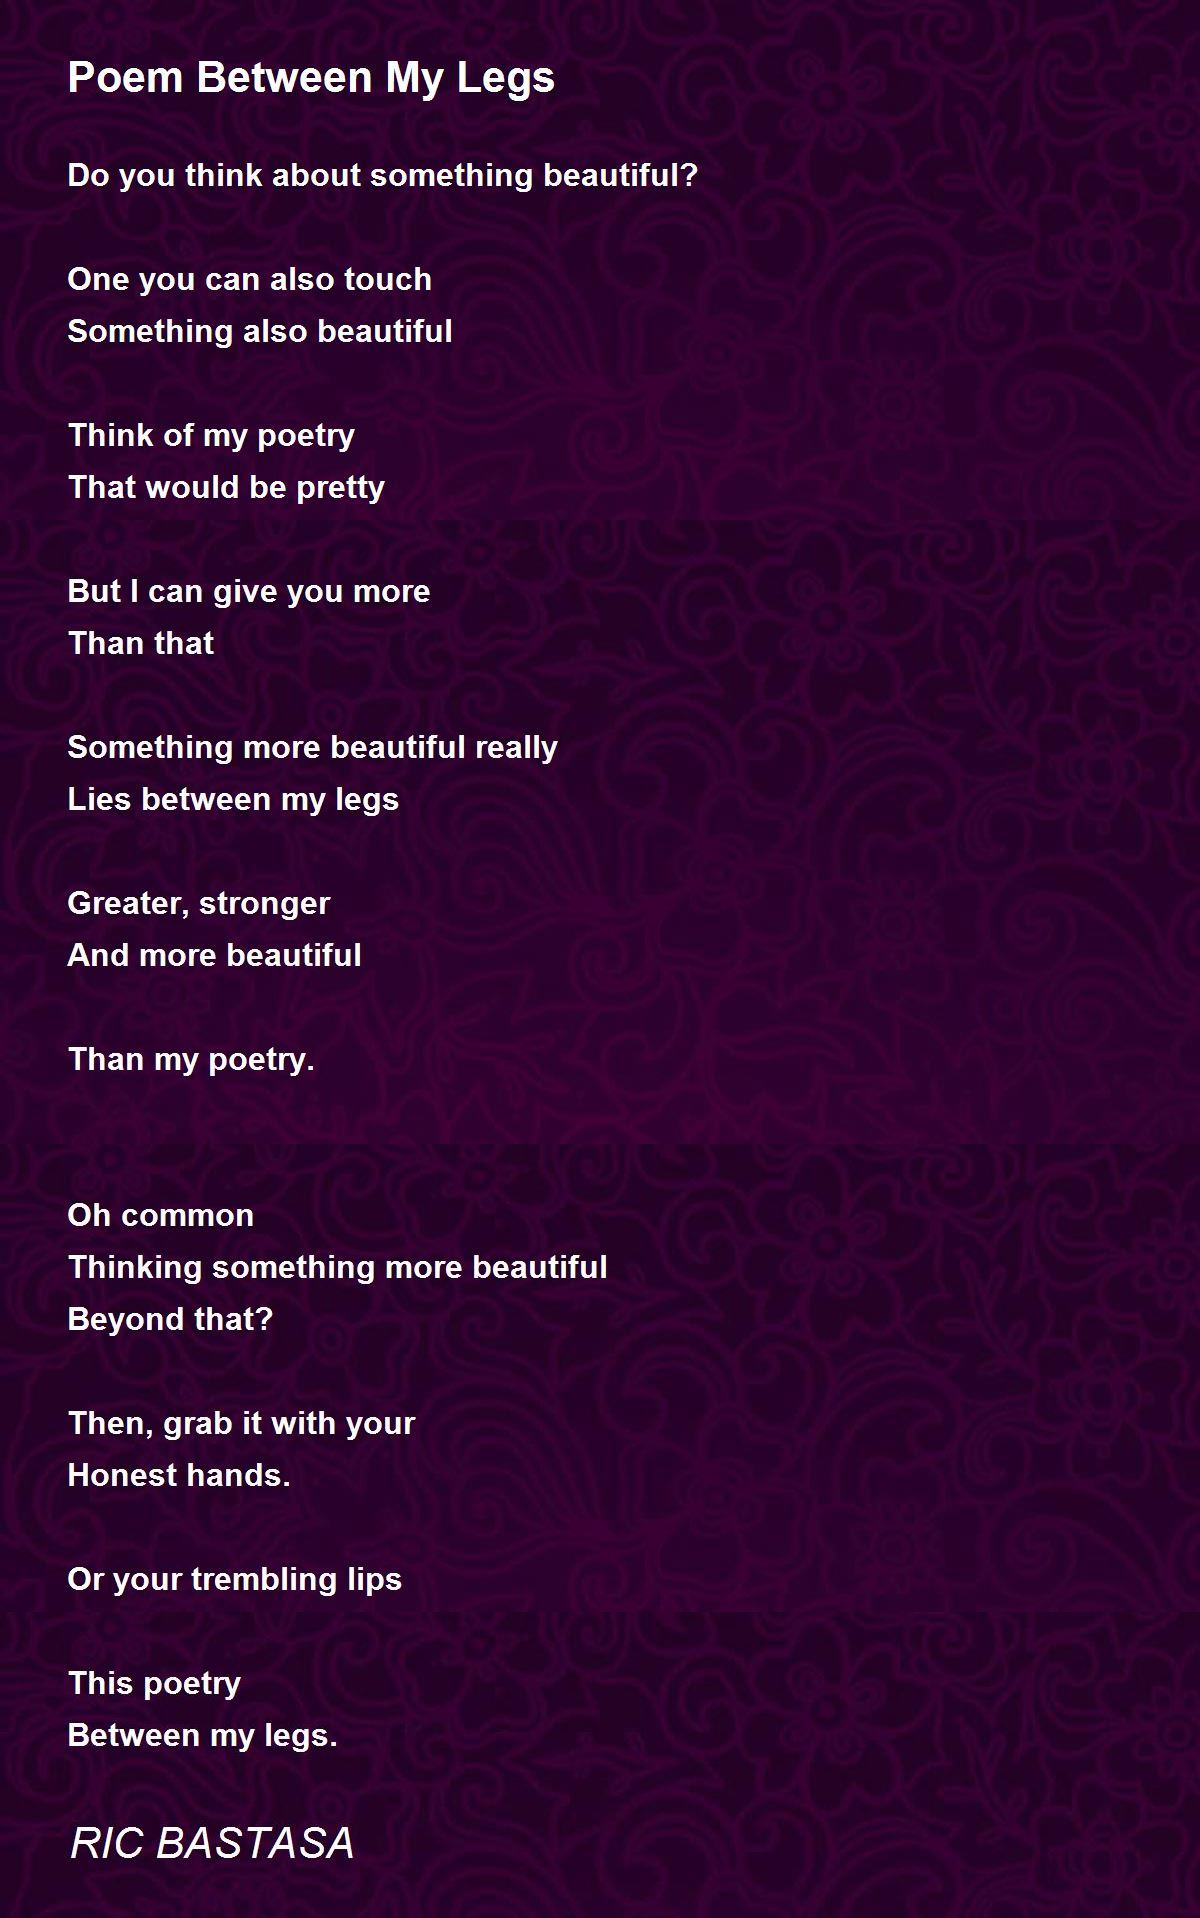 https://img.poemhunter.com/i/poem_images/131/poem-between-my-legs.jpg